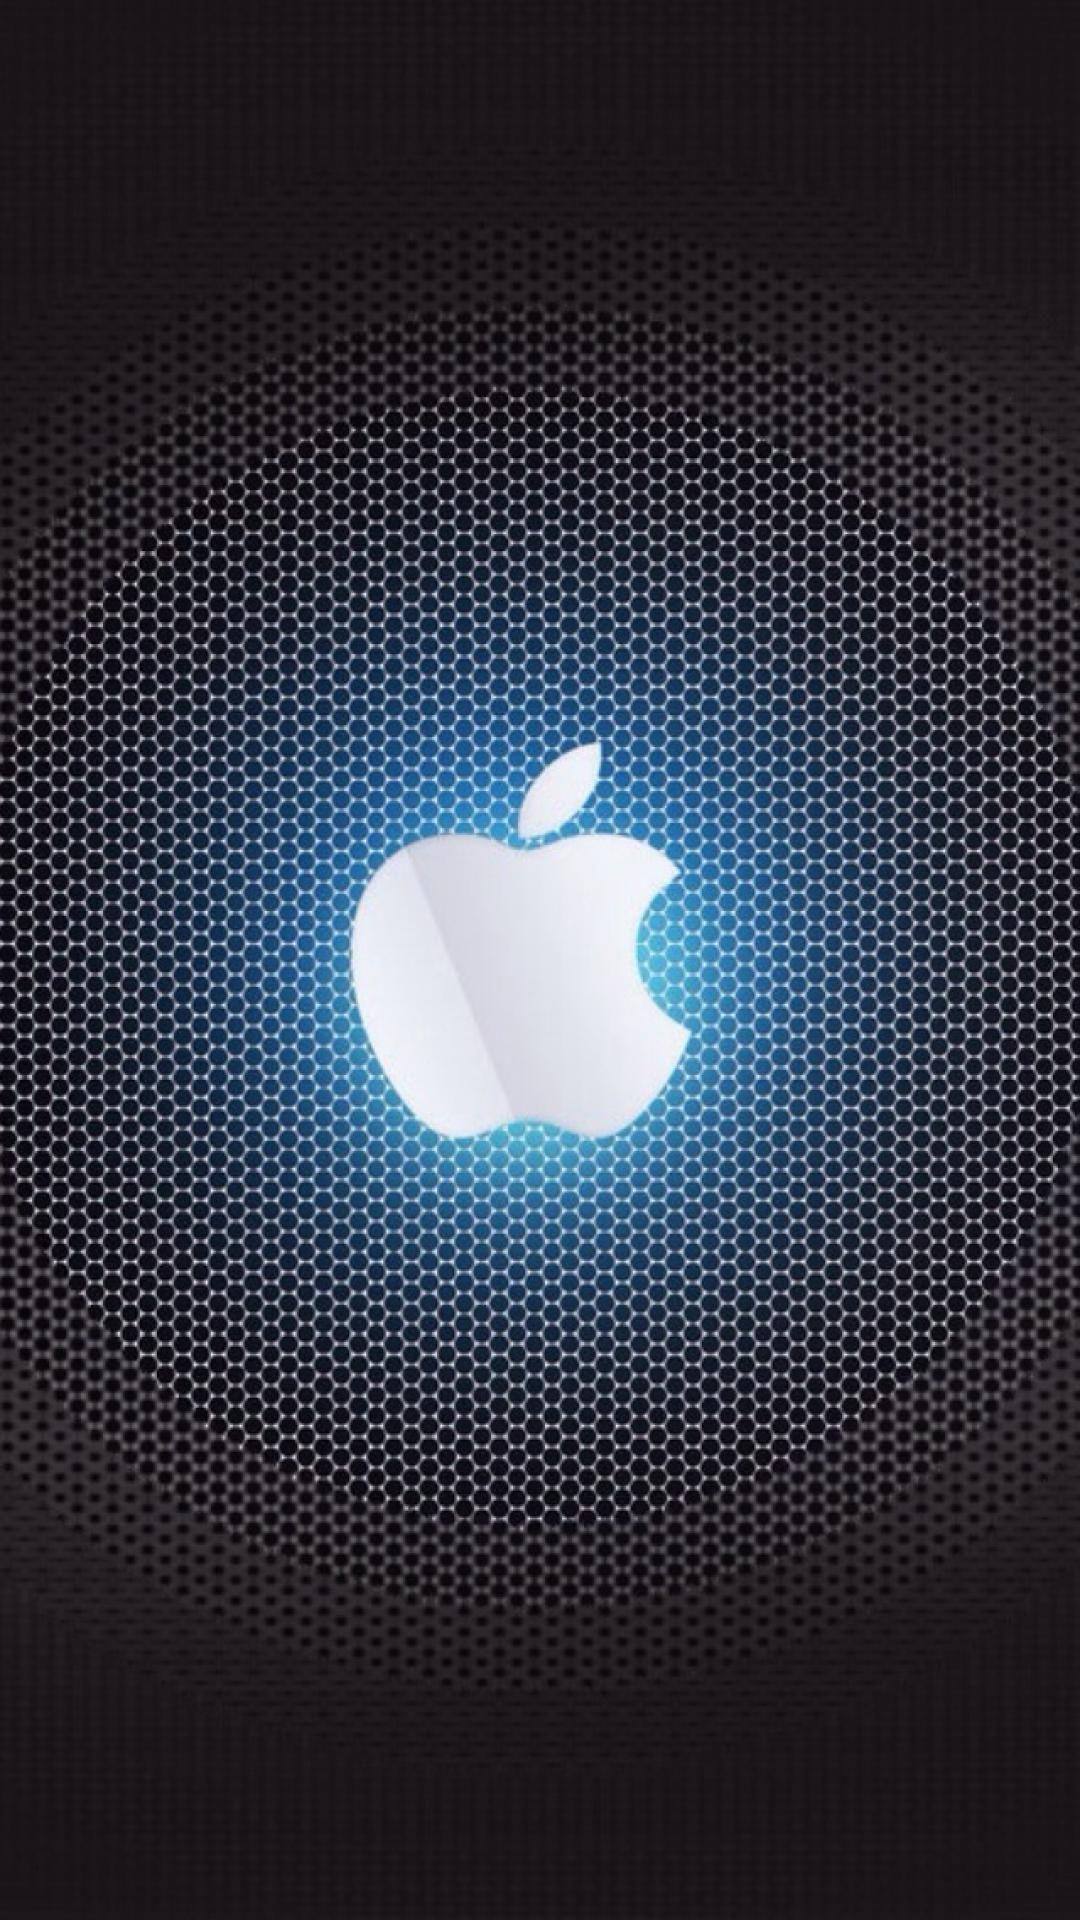 Plus Red Wallpaper Apple iPhone 6 image. Apple Love